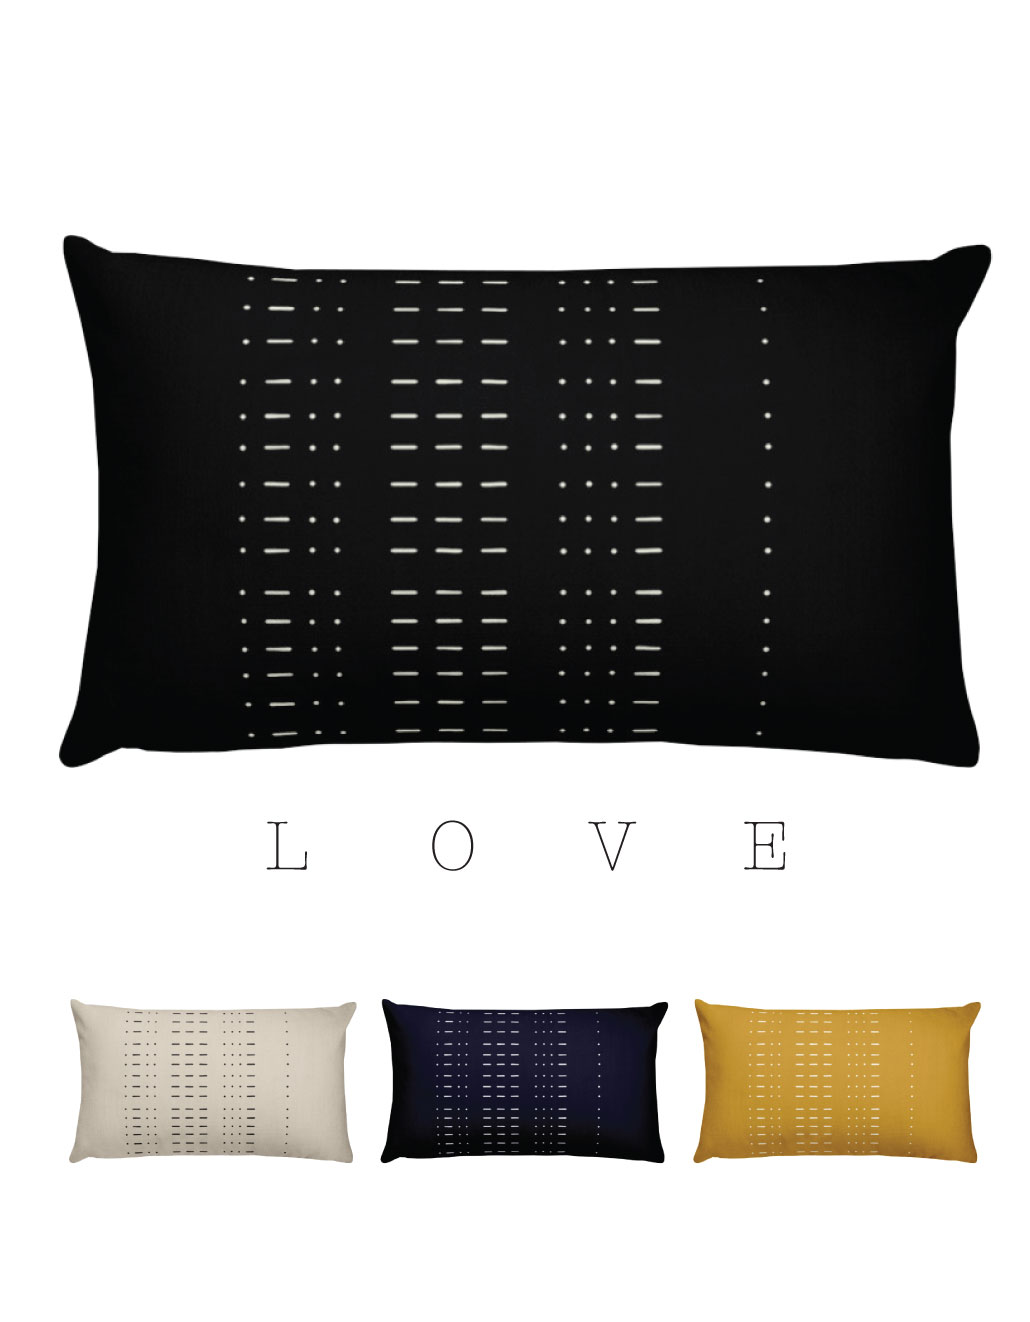 Coded Love – indigo blue morse code “LOVE” lumbar pillow